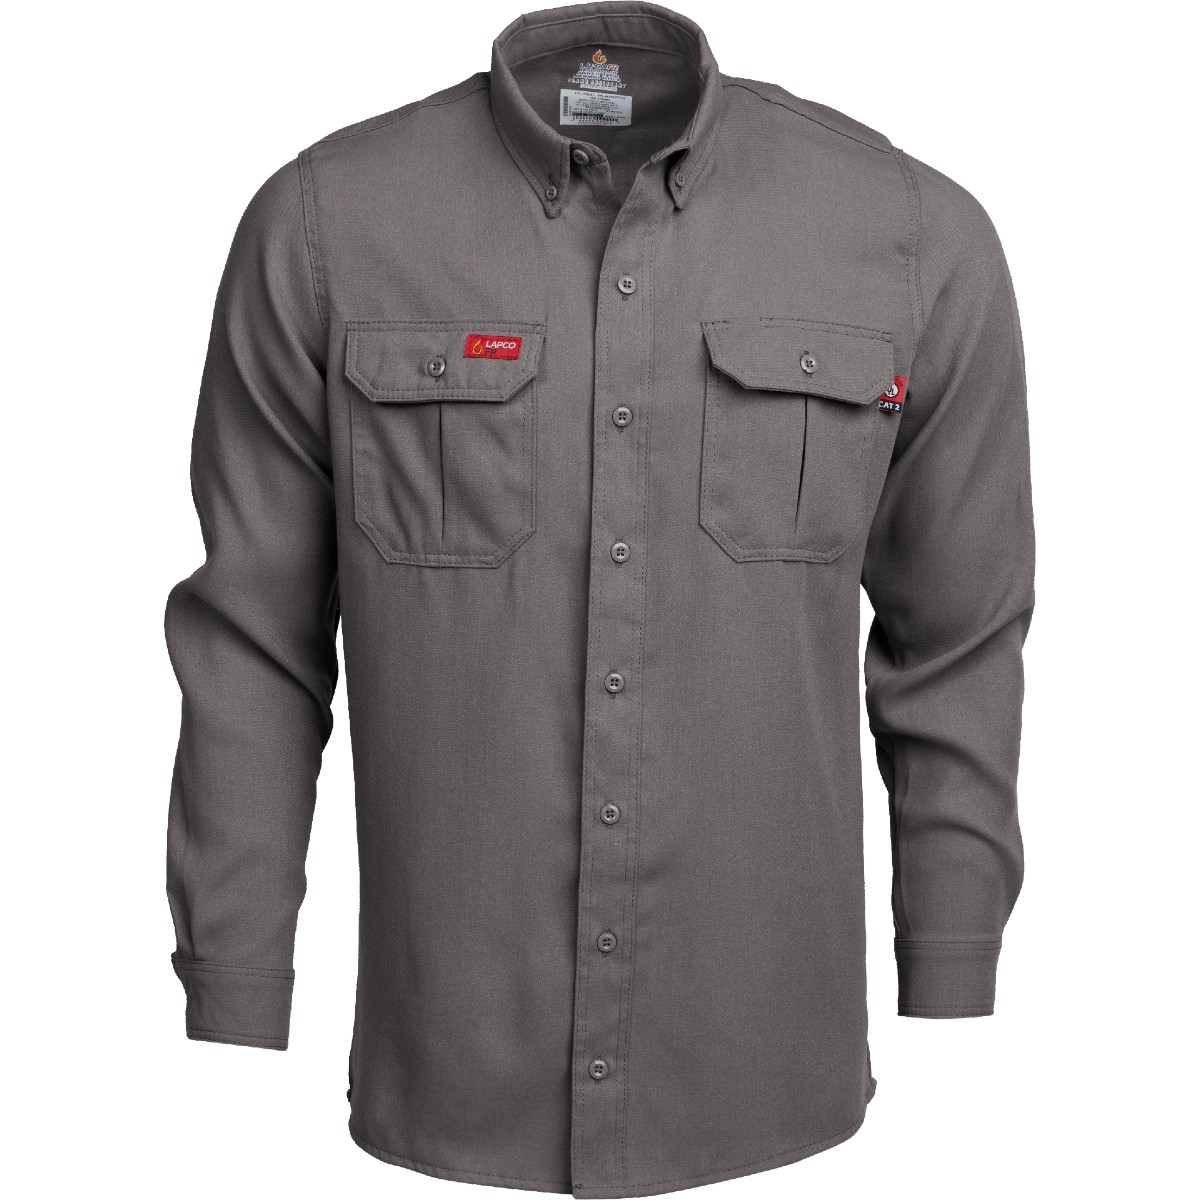 LAPCO FR Modern Uniform Shirt in Gray